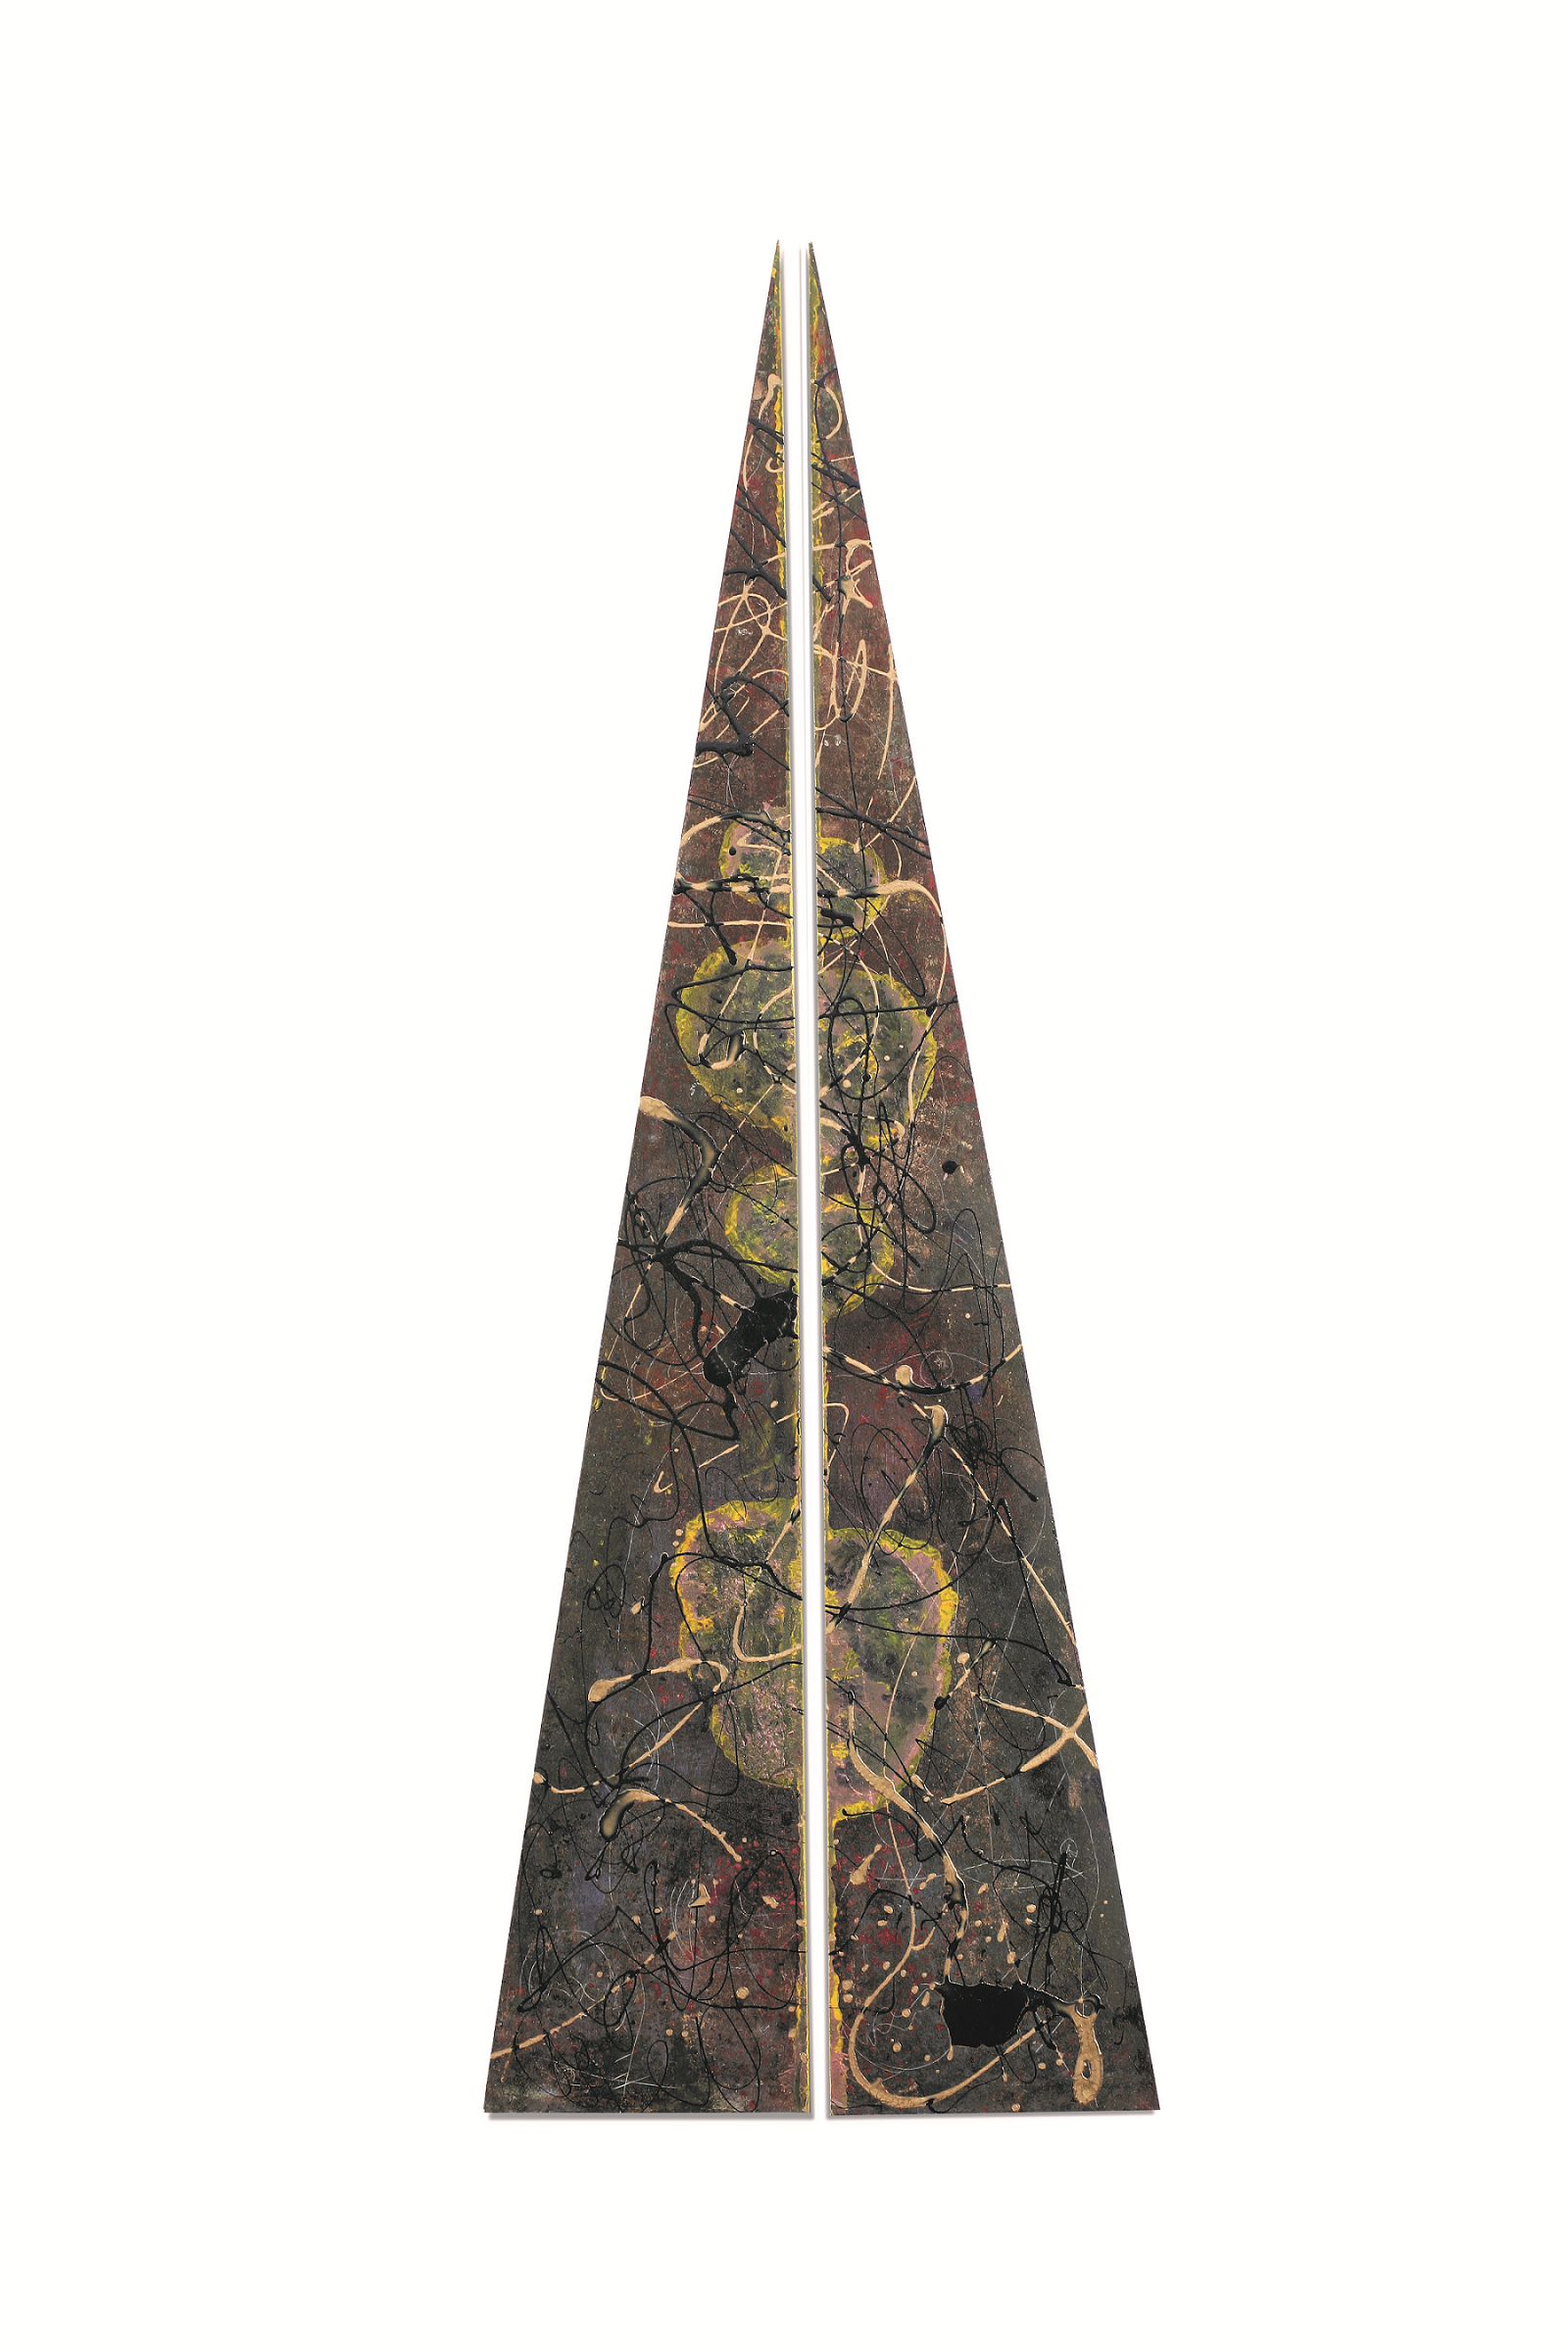 Mindscape, 98x34 cm, pigments on mdf, 2003